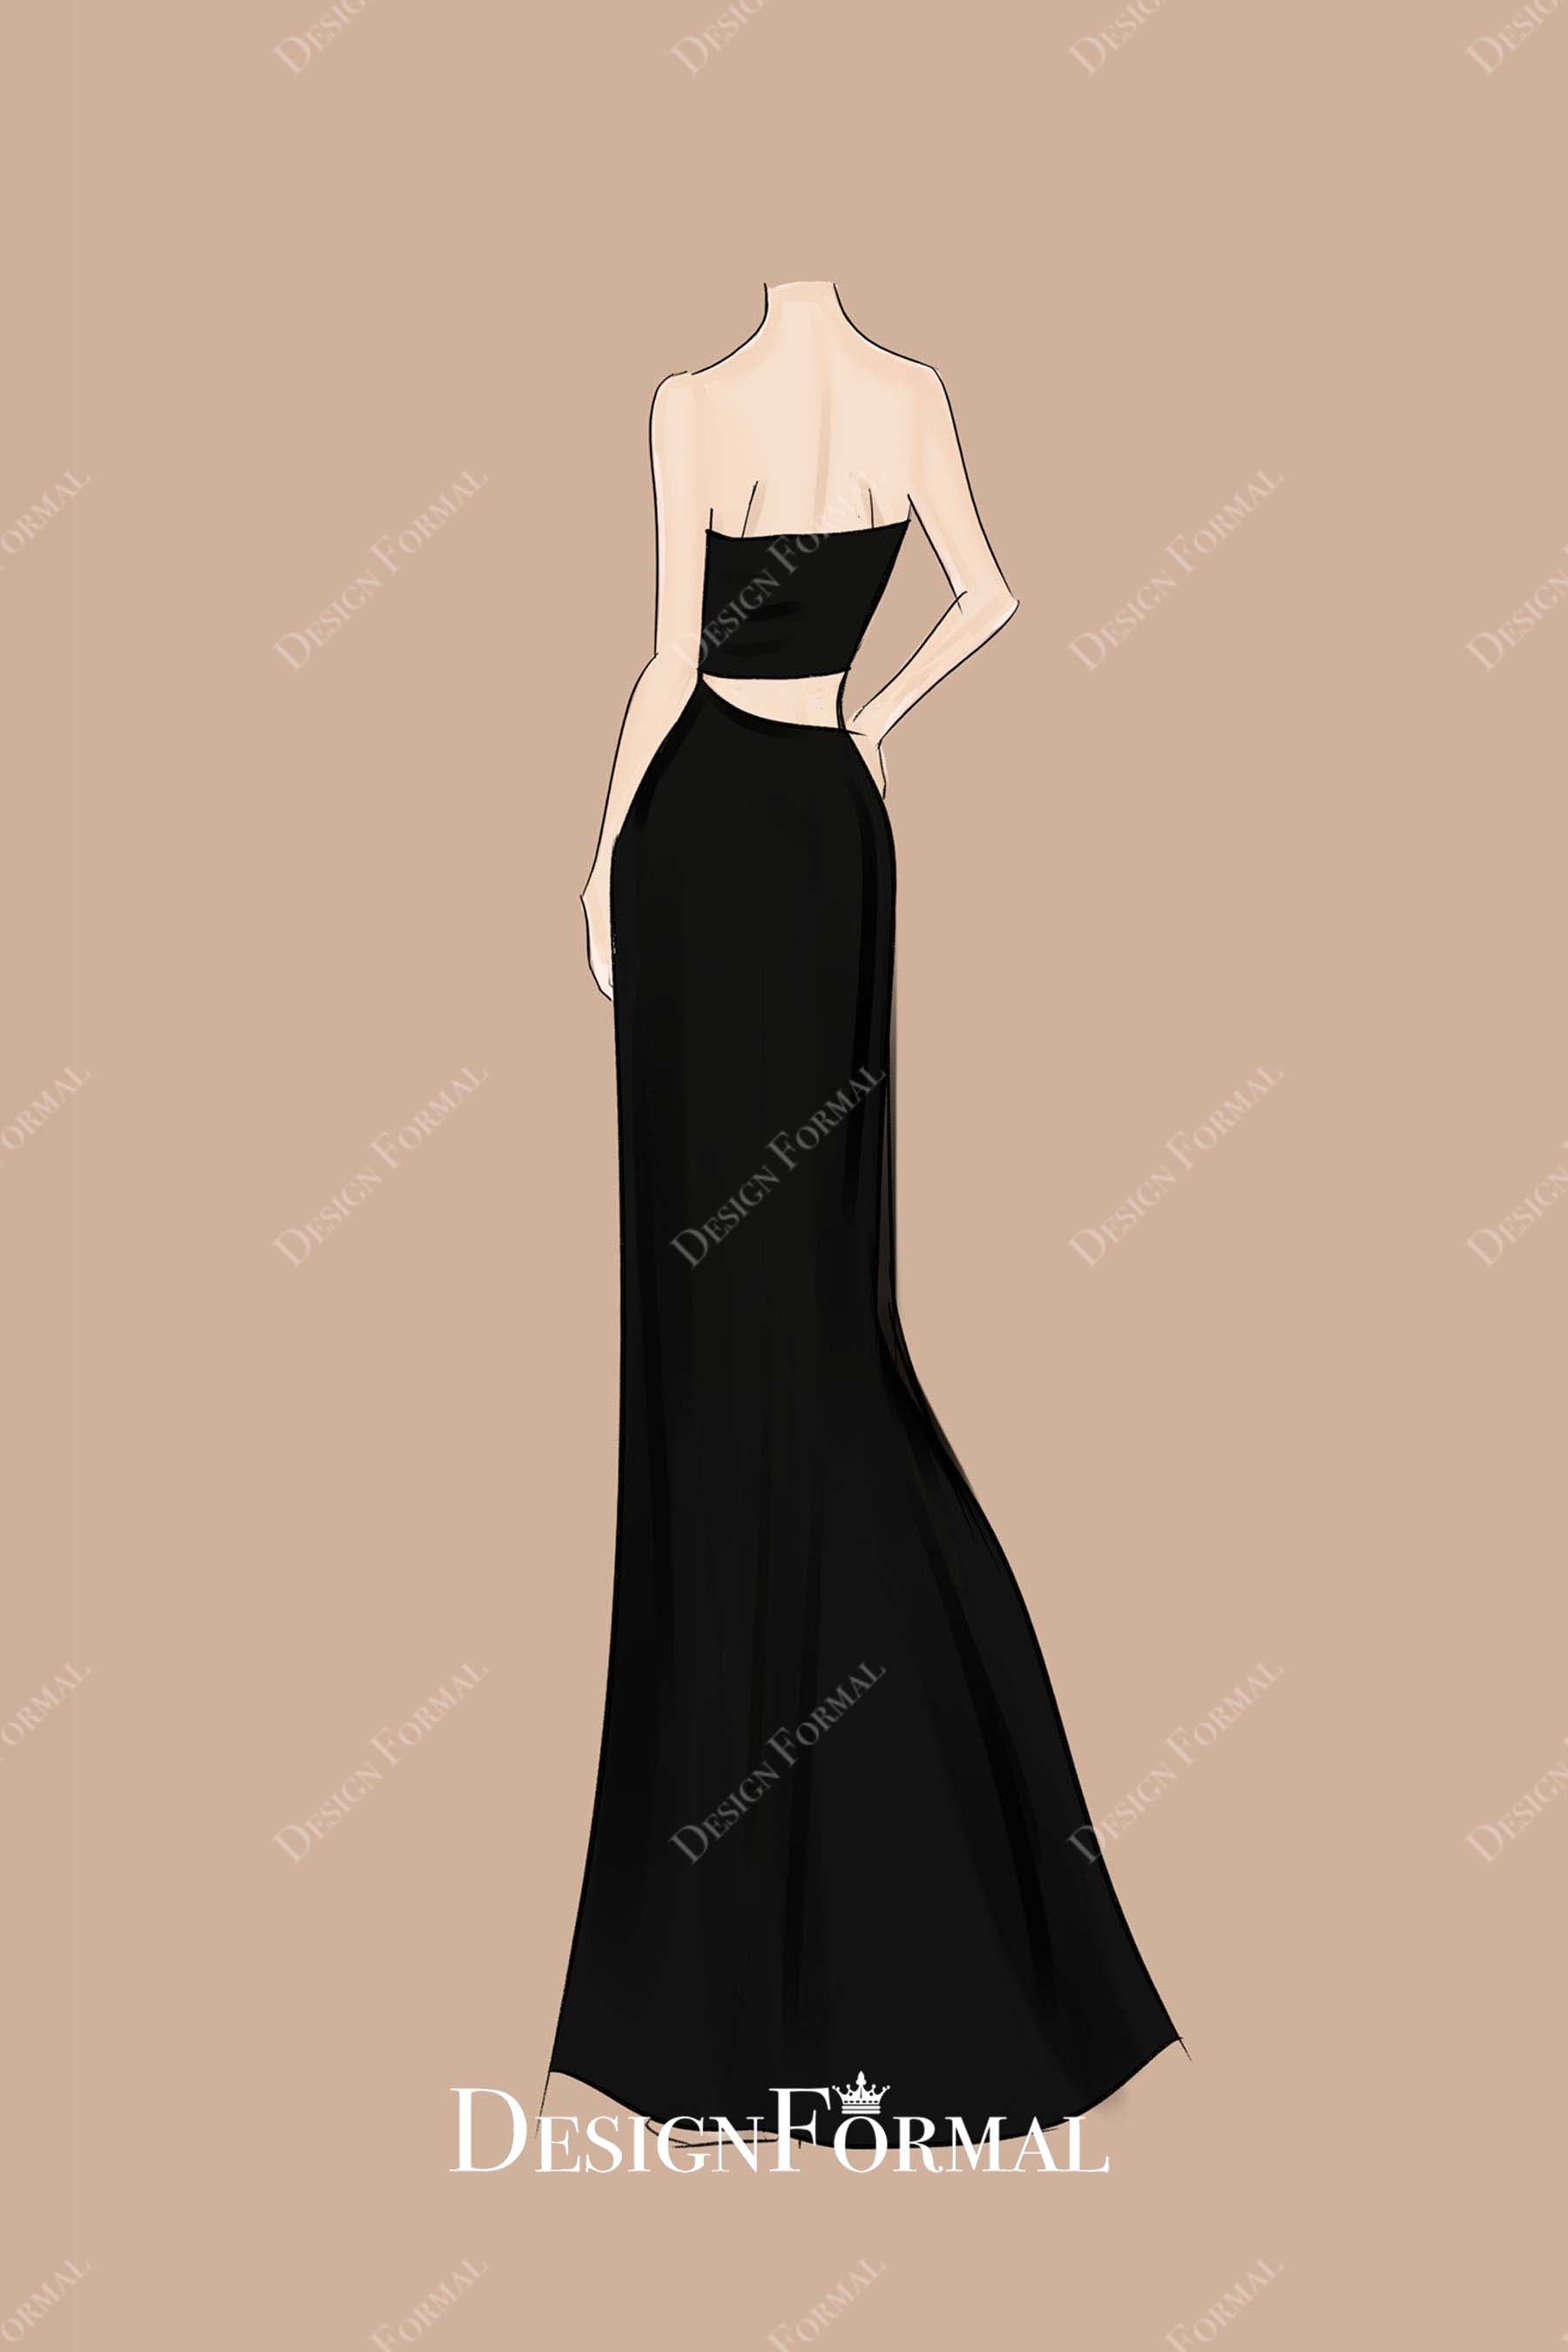 Black Strapless Floor Length Prom Dress Sketch